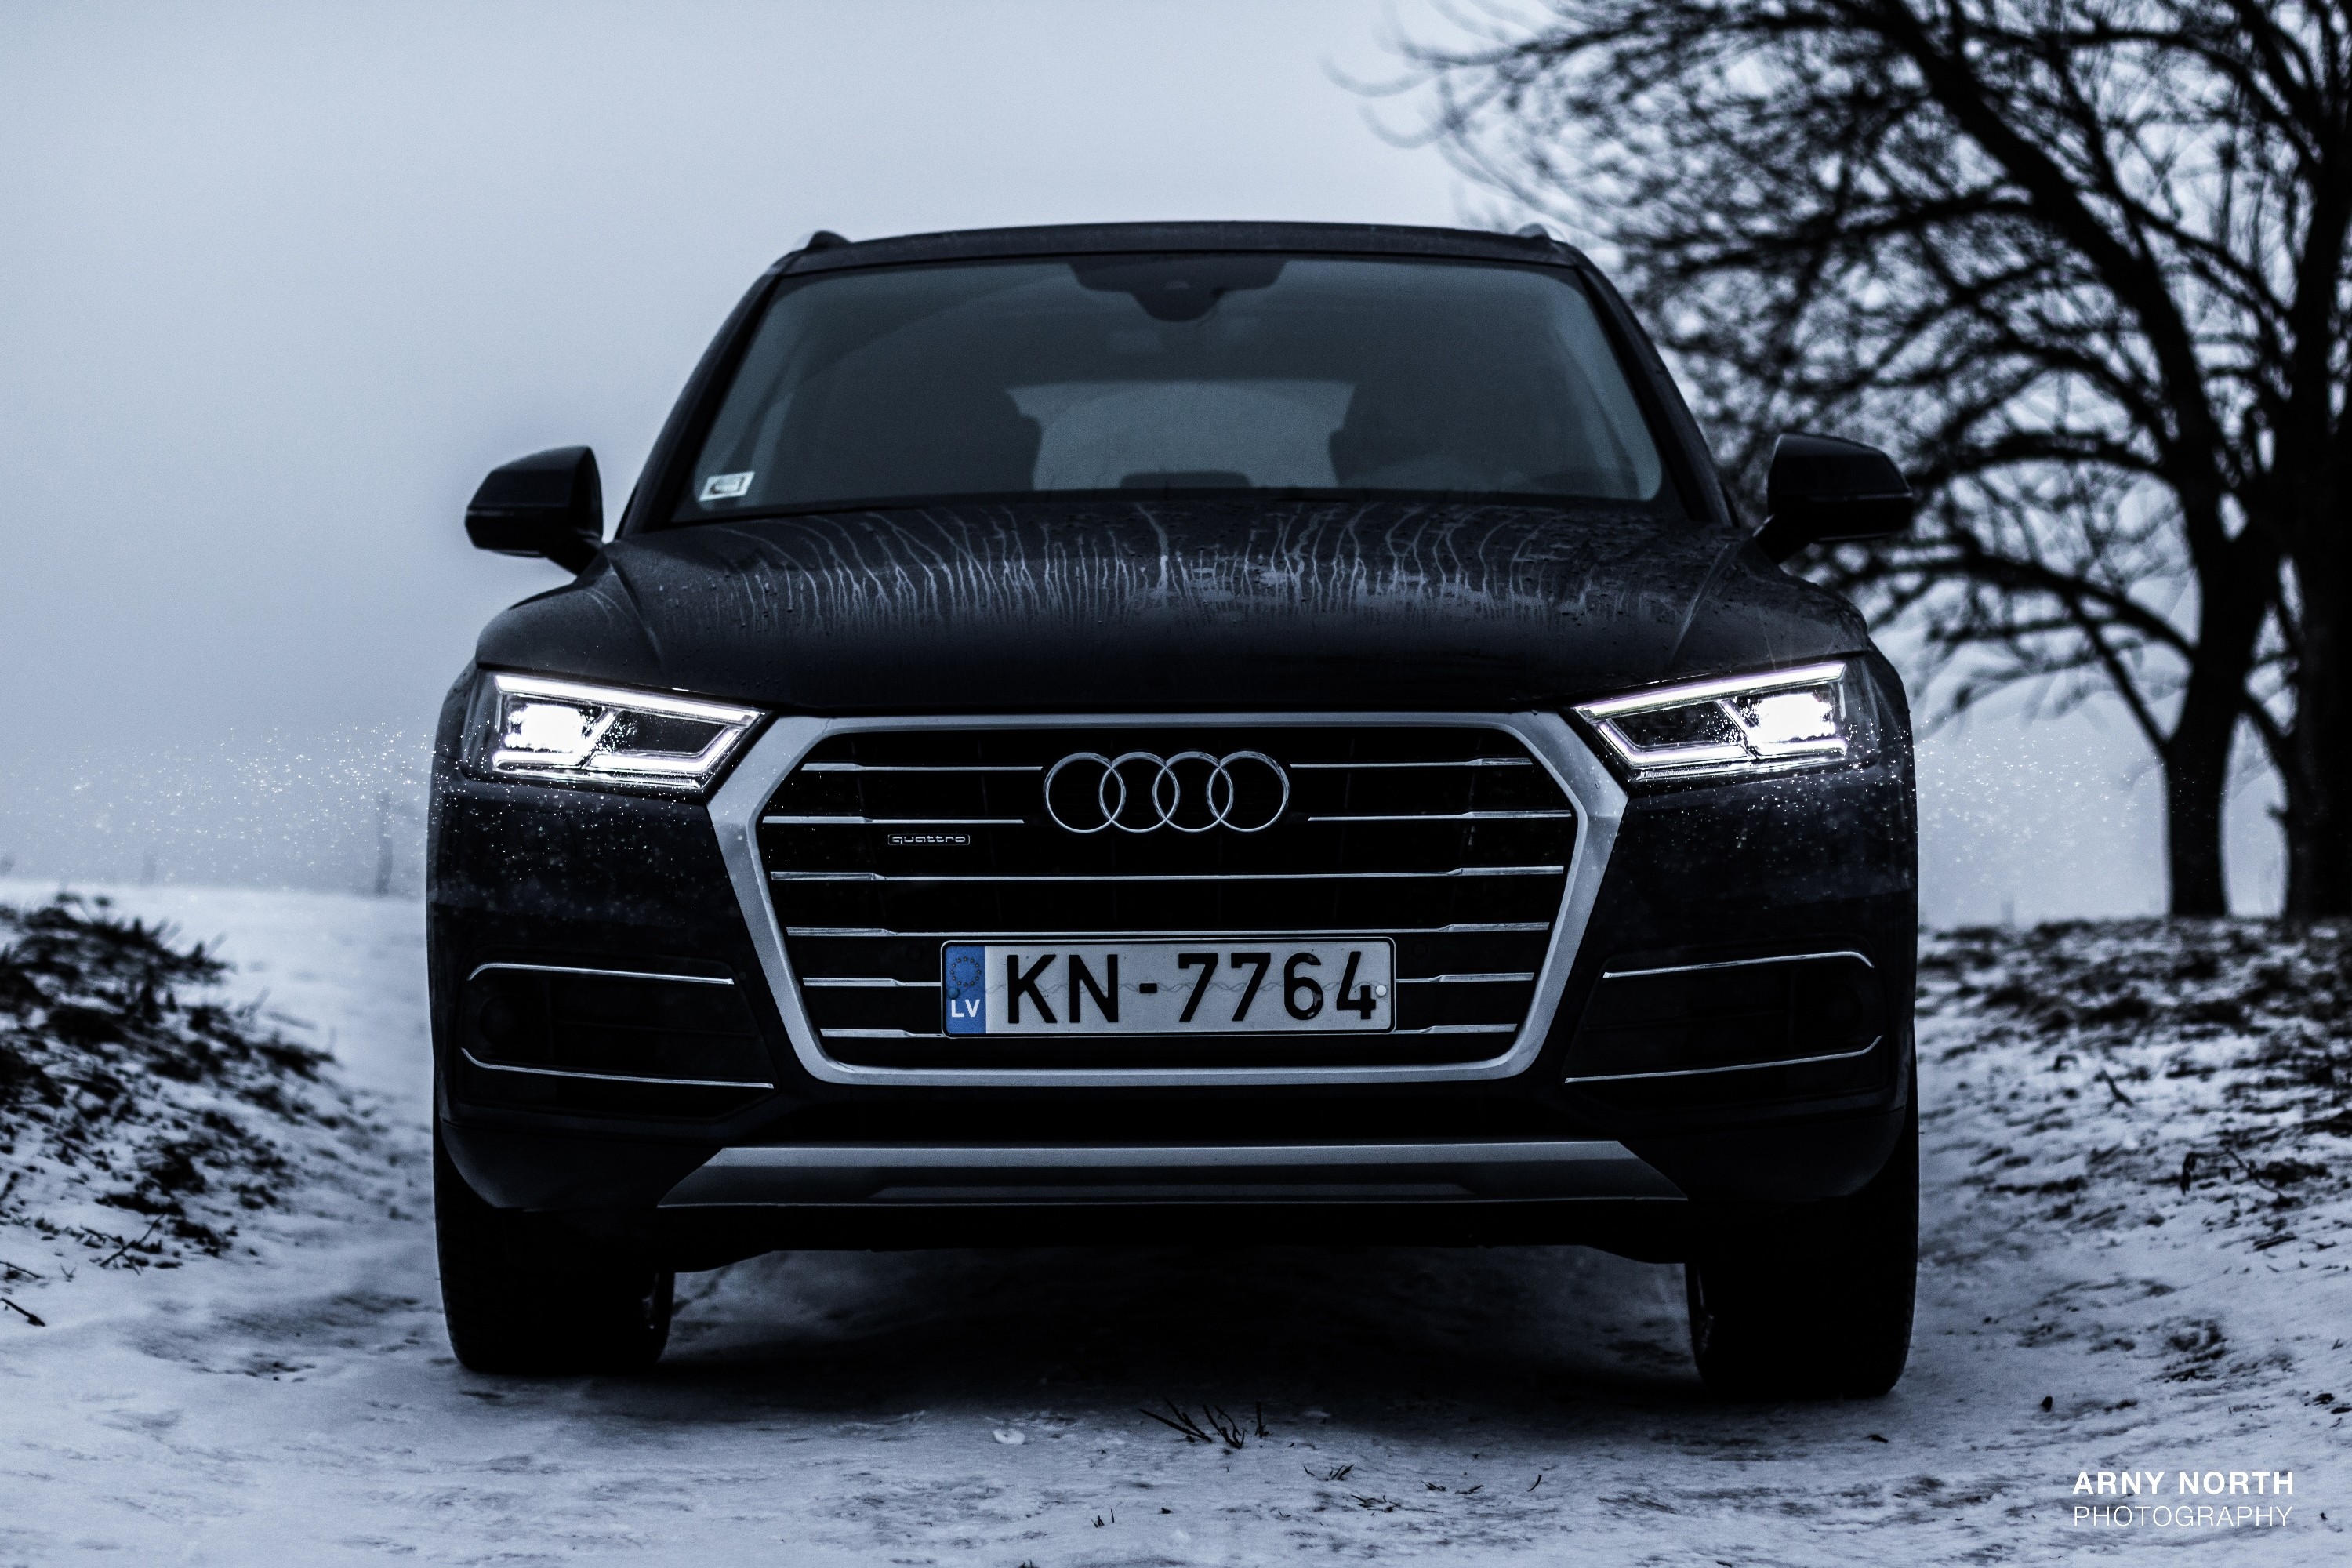 Audi Q5, Audi quattro, Snow, Latvia, Arny North Wallpaper